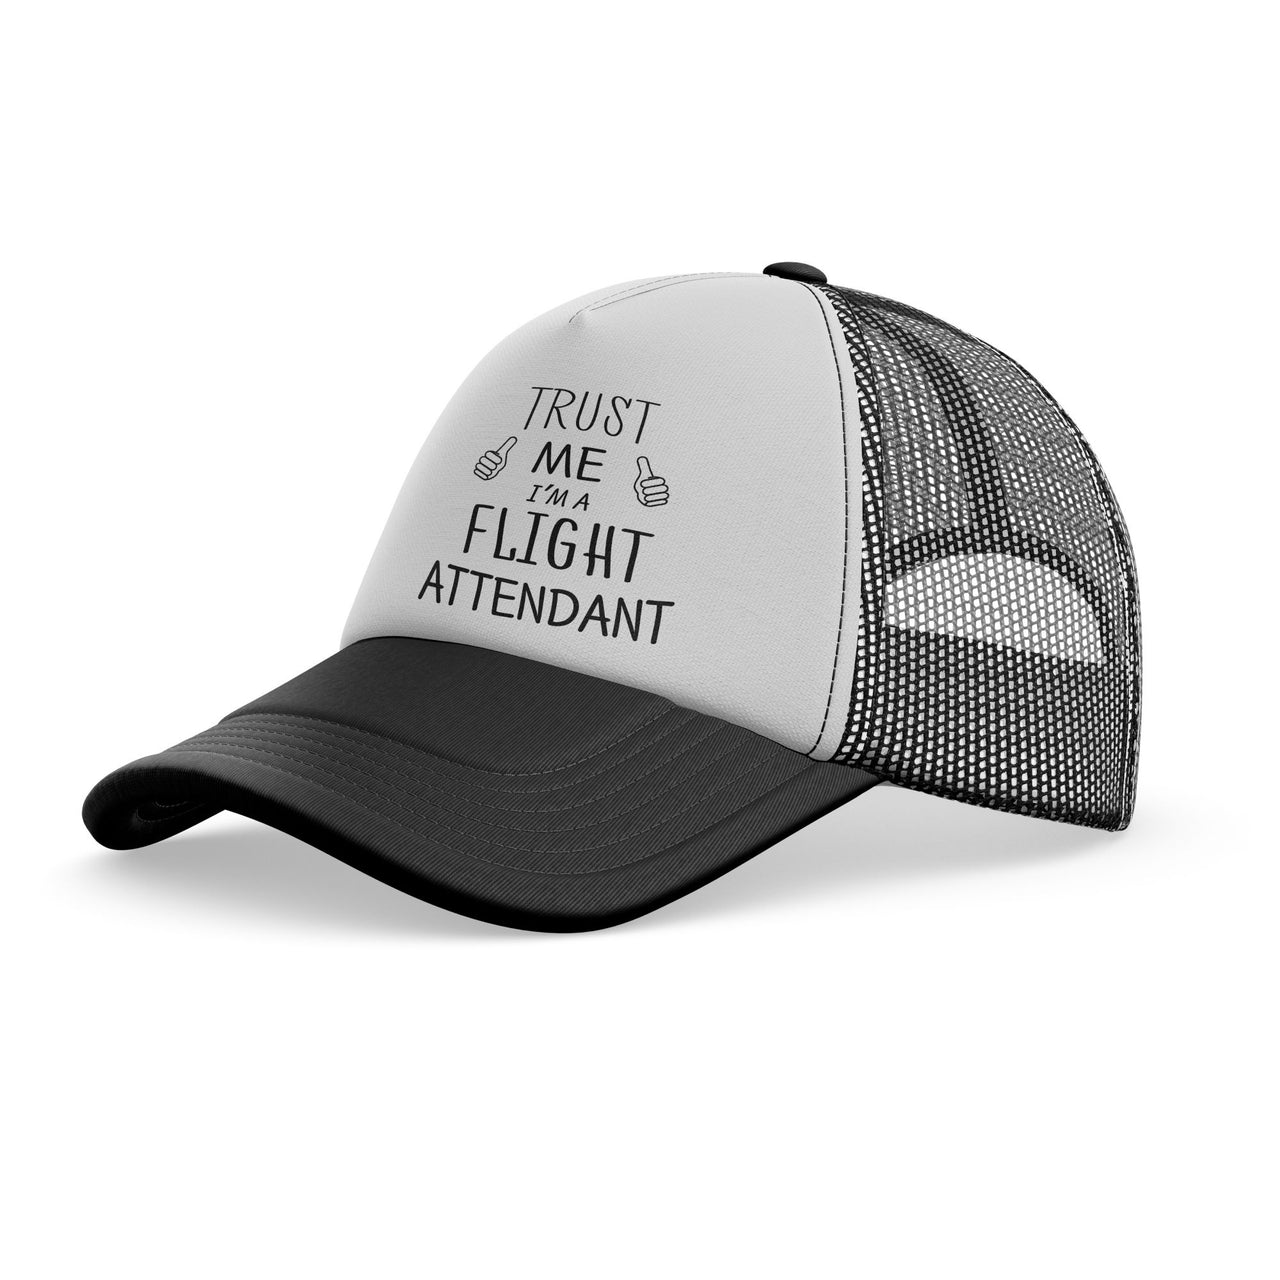 Trust Me I'm a Flight Attendant Designed Trucker Caps & Hats